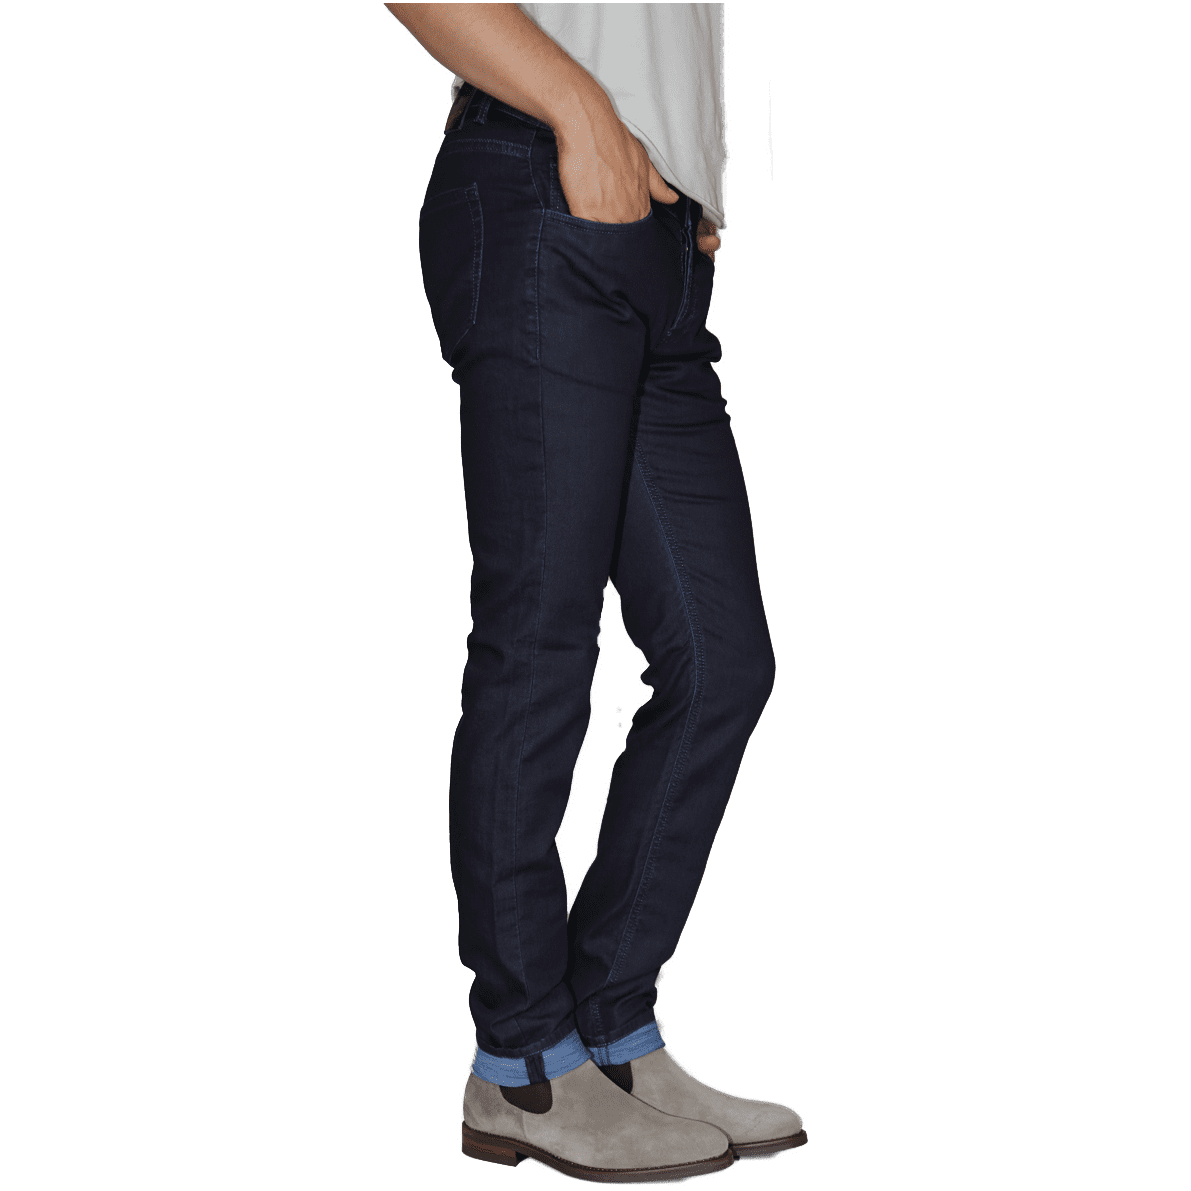 Cabinero Stiles Berlin PG Enjoy Jeans, Herrenhosen, made in Italy AW17-18 2